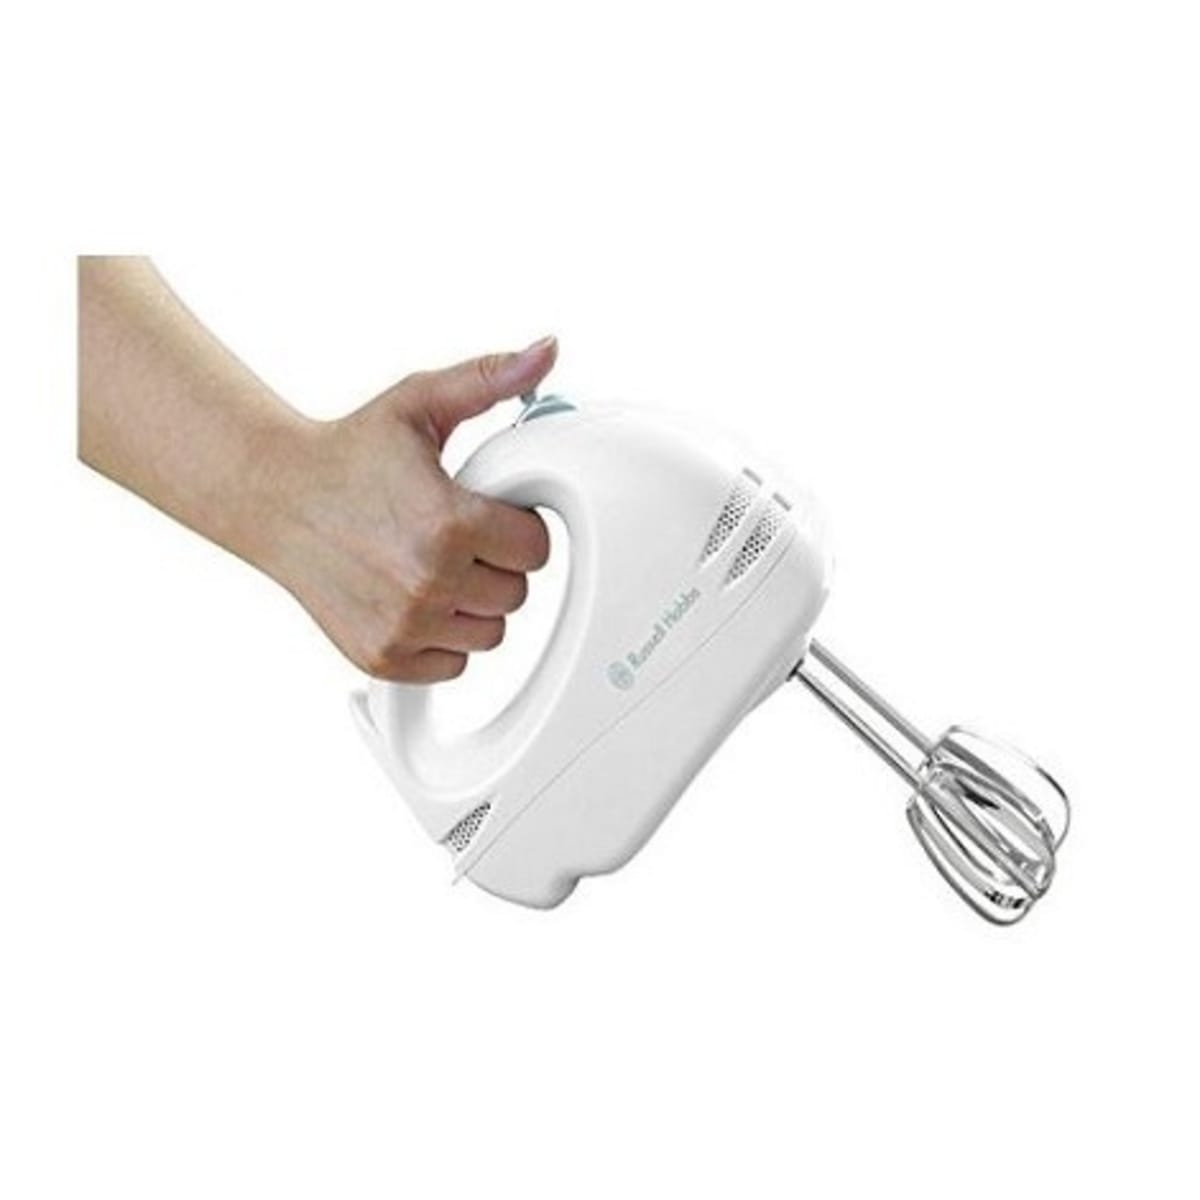 Bosch 450W Hand Mixer  Konga Online Shopping